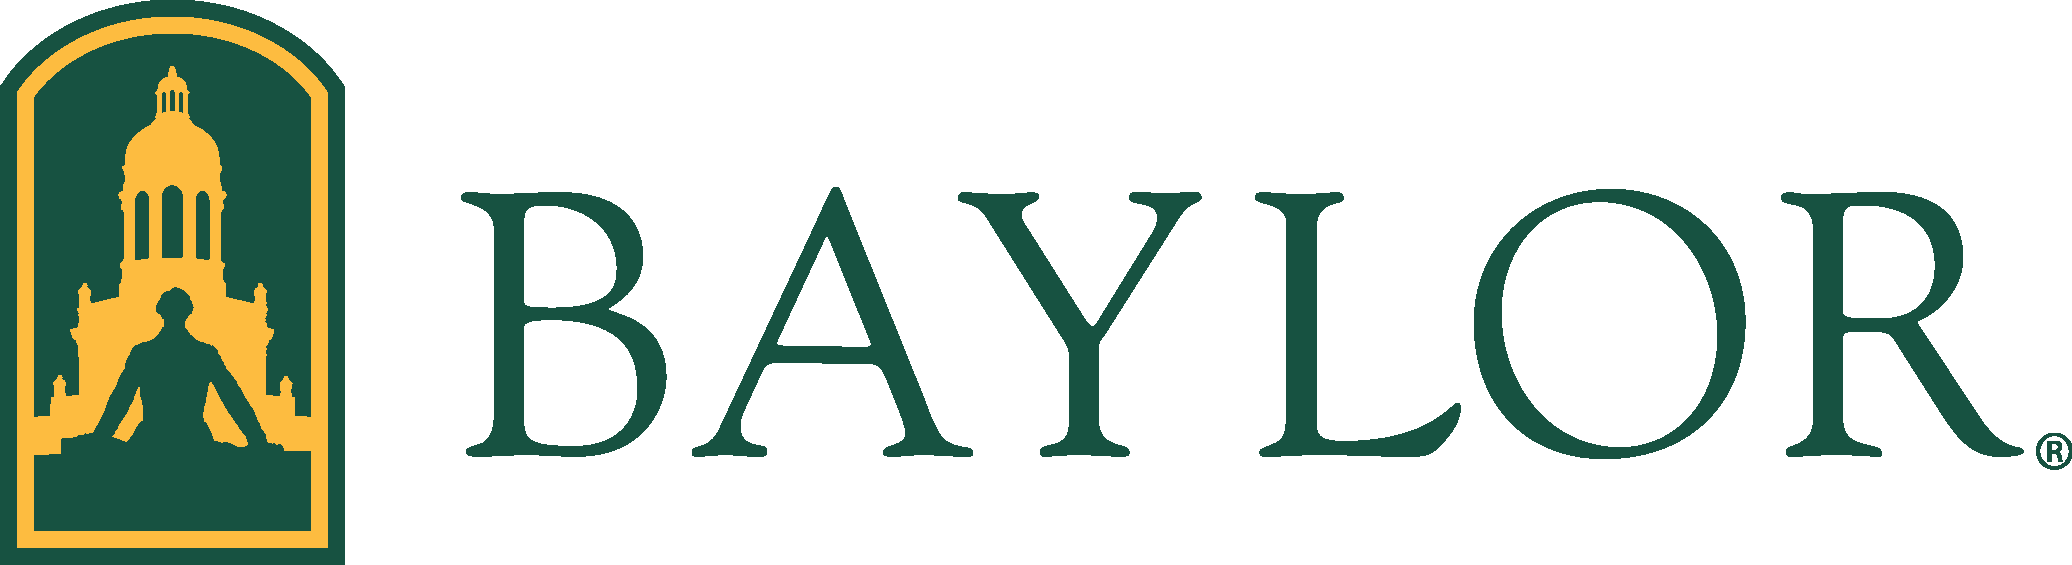 Baylor Logo - LogoDix